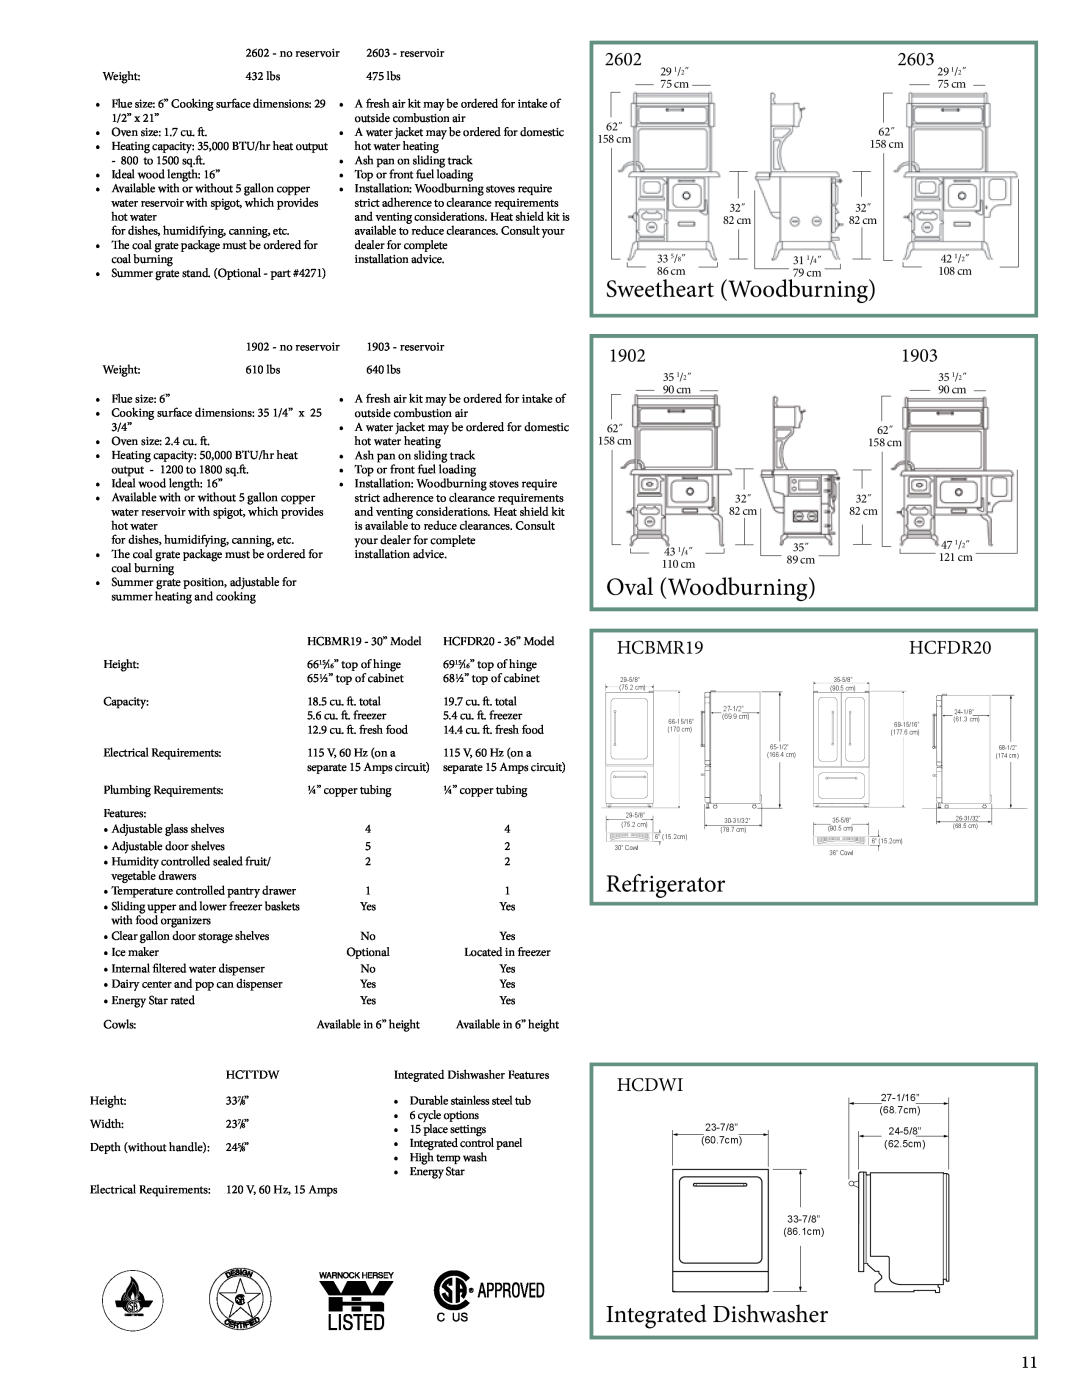 Heartland HCFDR20-WHT manual Sweetheart Woodburning, Oval Woodburning, Integrated Dishwasher, Refrigerator, HCBMR19, C Us 